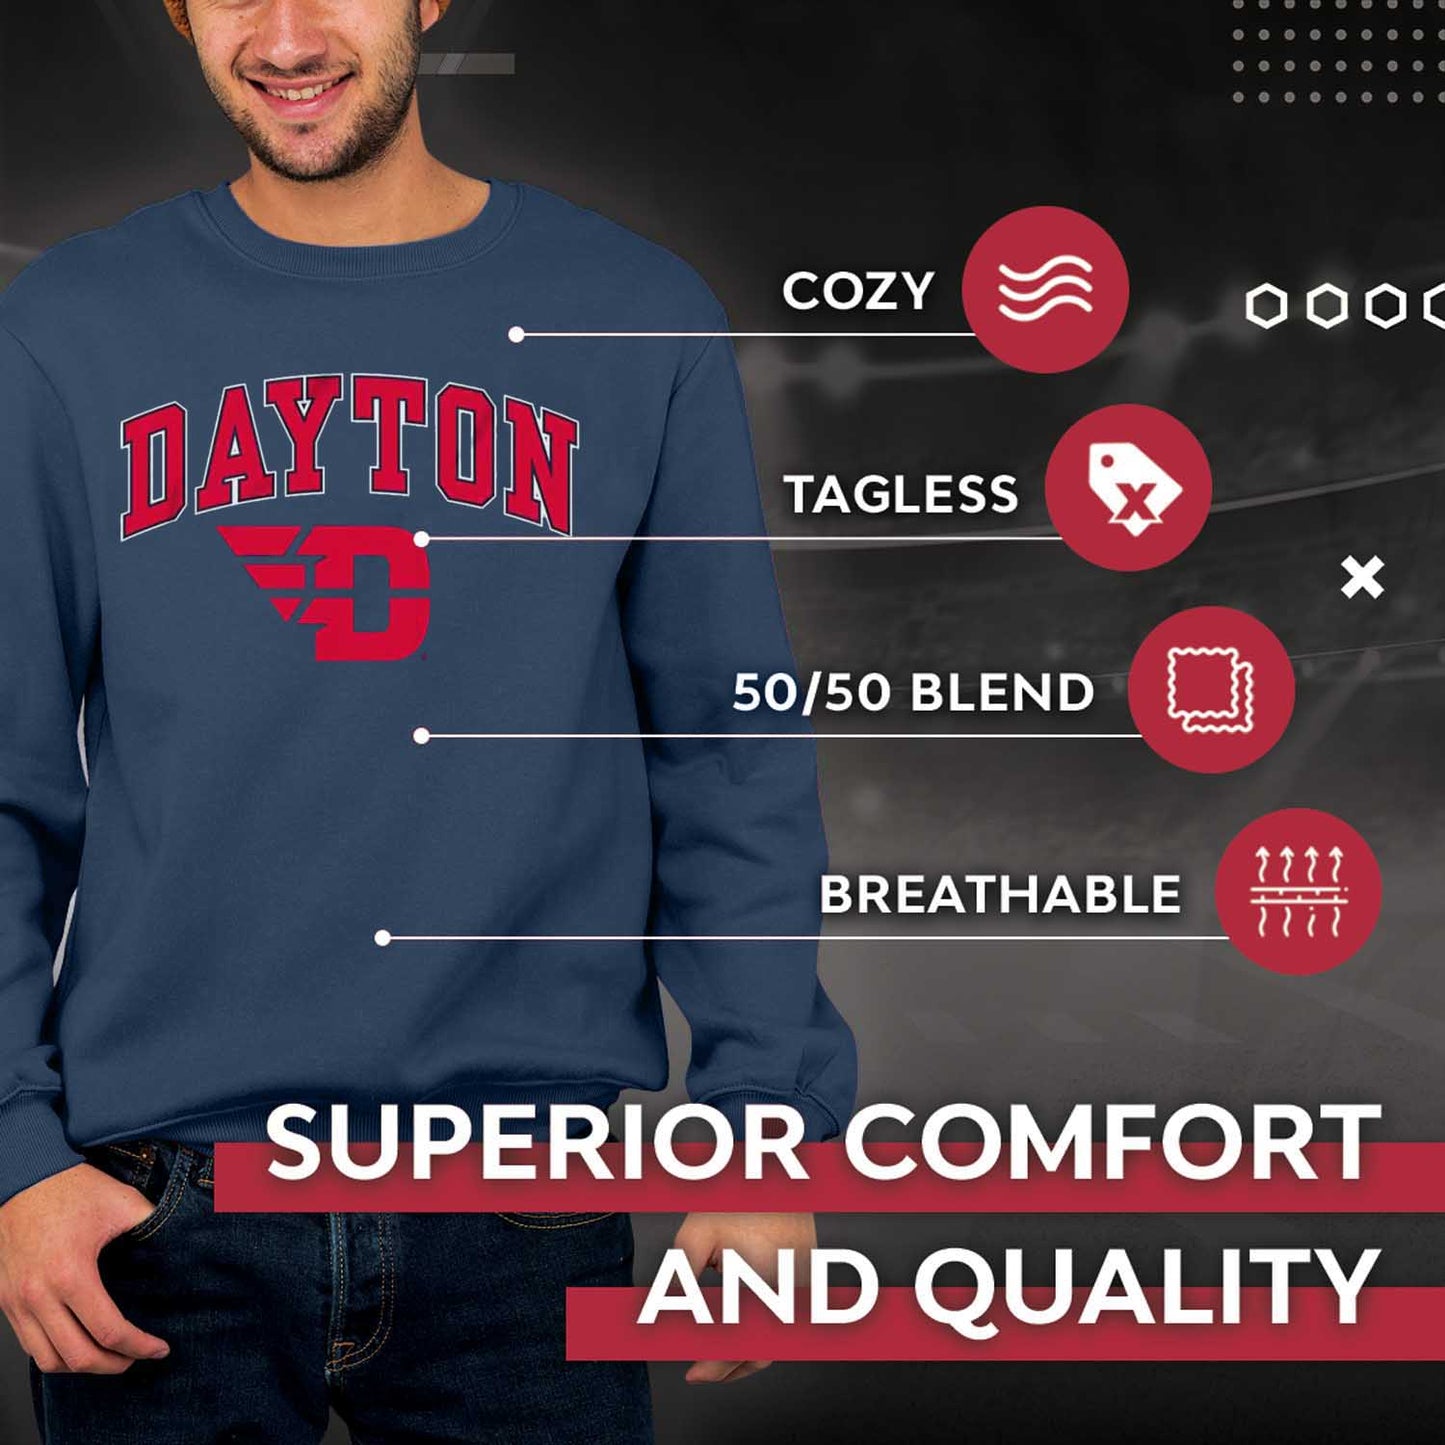 Dayton Flyers Adult Arch & Logo Soft Style Gameday Crewneck Sweatshirt - Navy